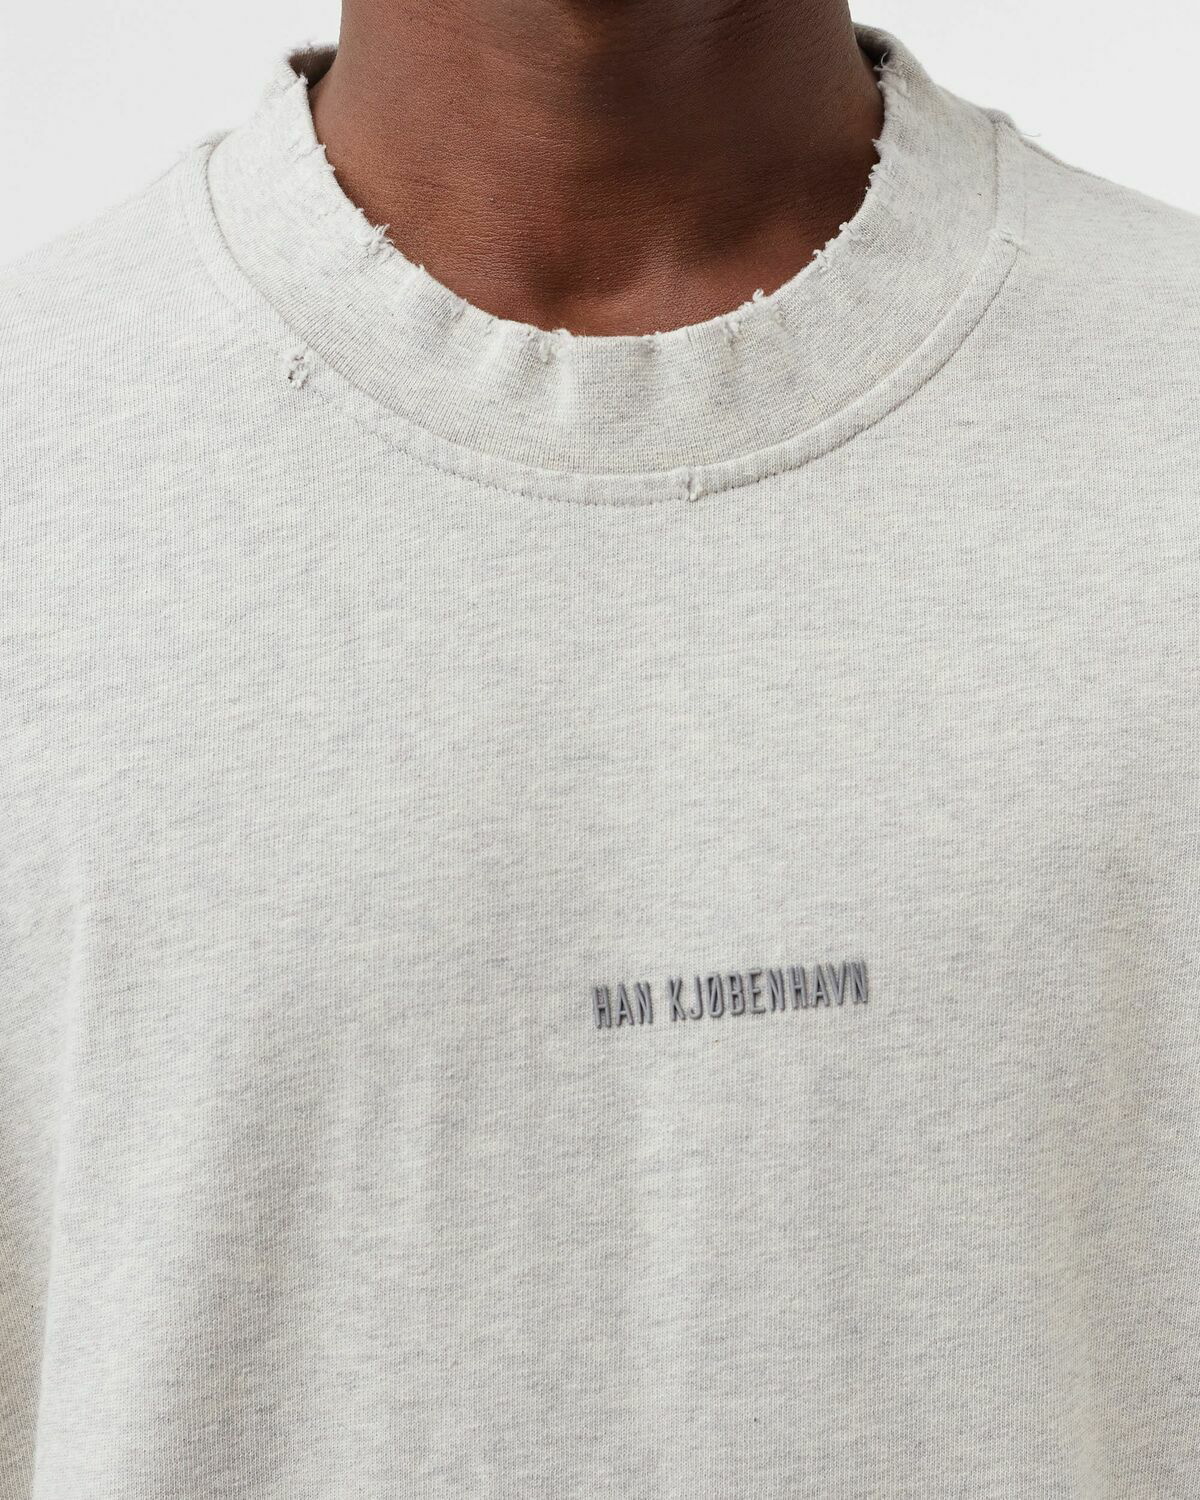 Han Kjobenhavn Distressed Tee Short Sleeve Logo Grey - Mens ...